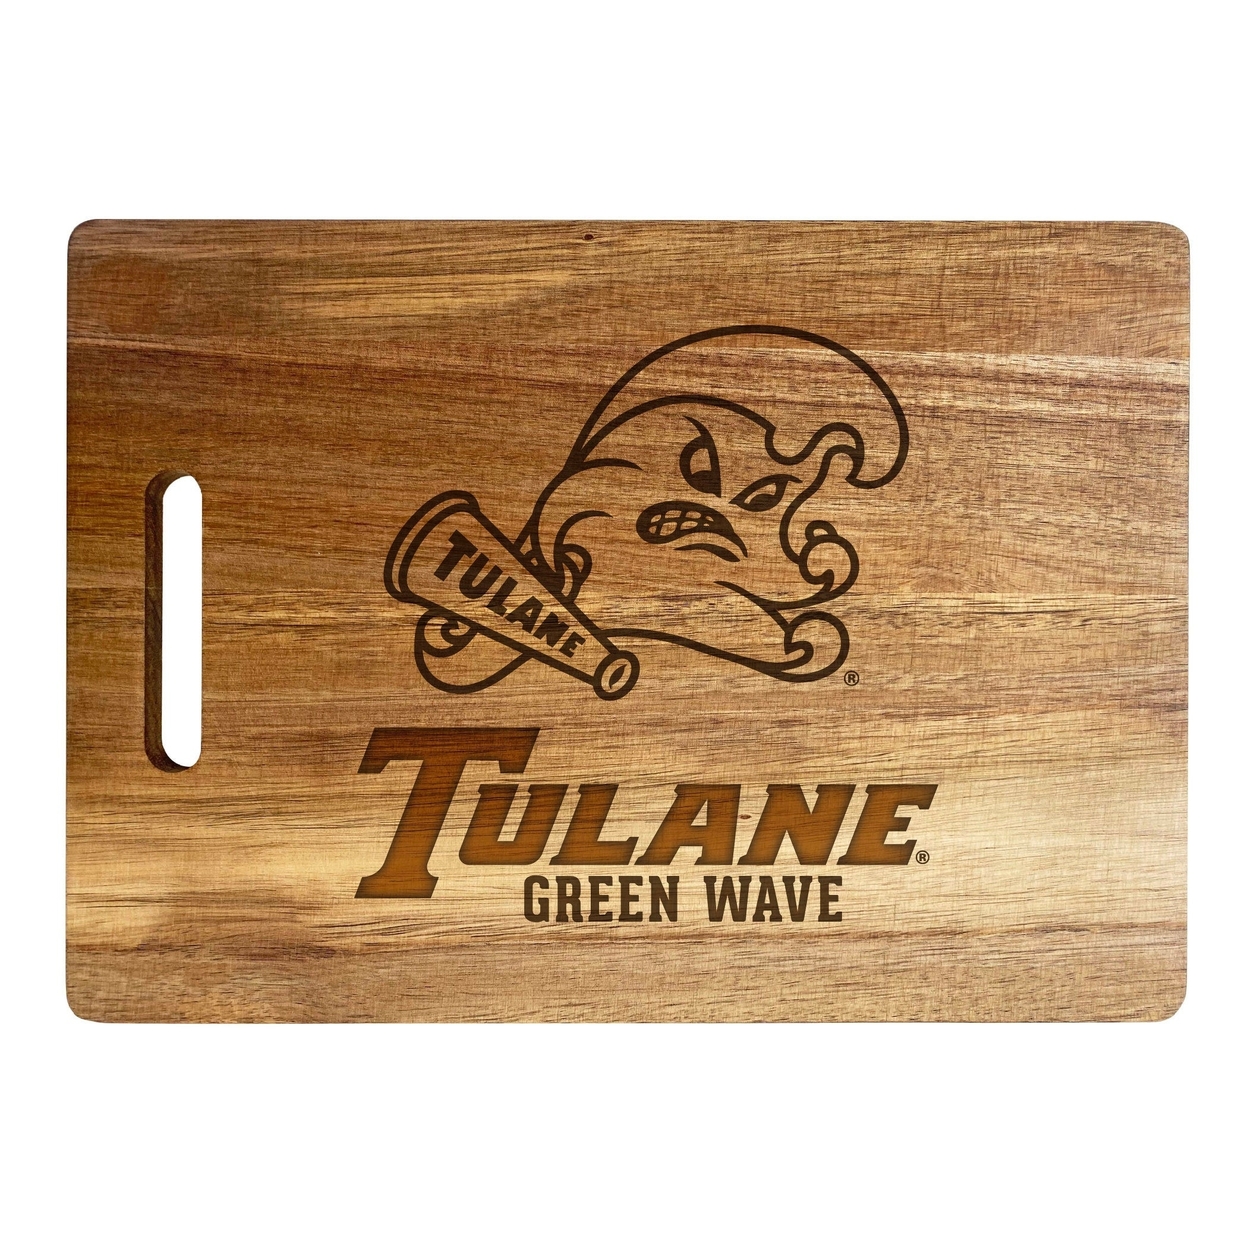 Tulane University Green Wave Engraved Wooden Cutting Board 10 X 14 Acacia Wood - Large Engraving